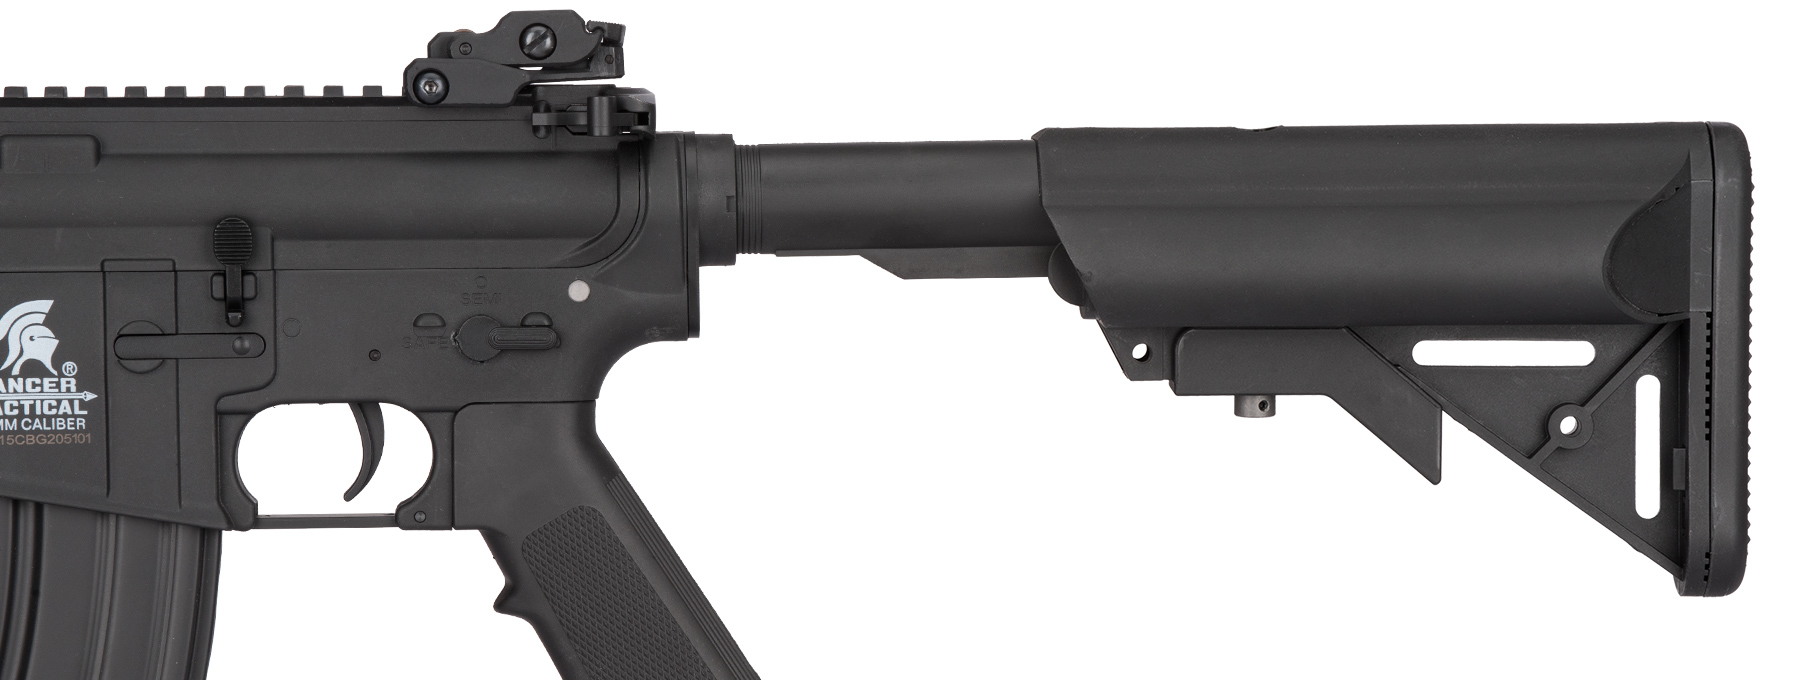 Lancer Tactical Low FPS Gen 2 9" M4 SD Carbine Airsoft AEG Rifle with Mock Suppressor (Color: Black)